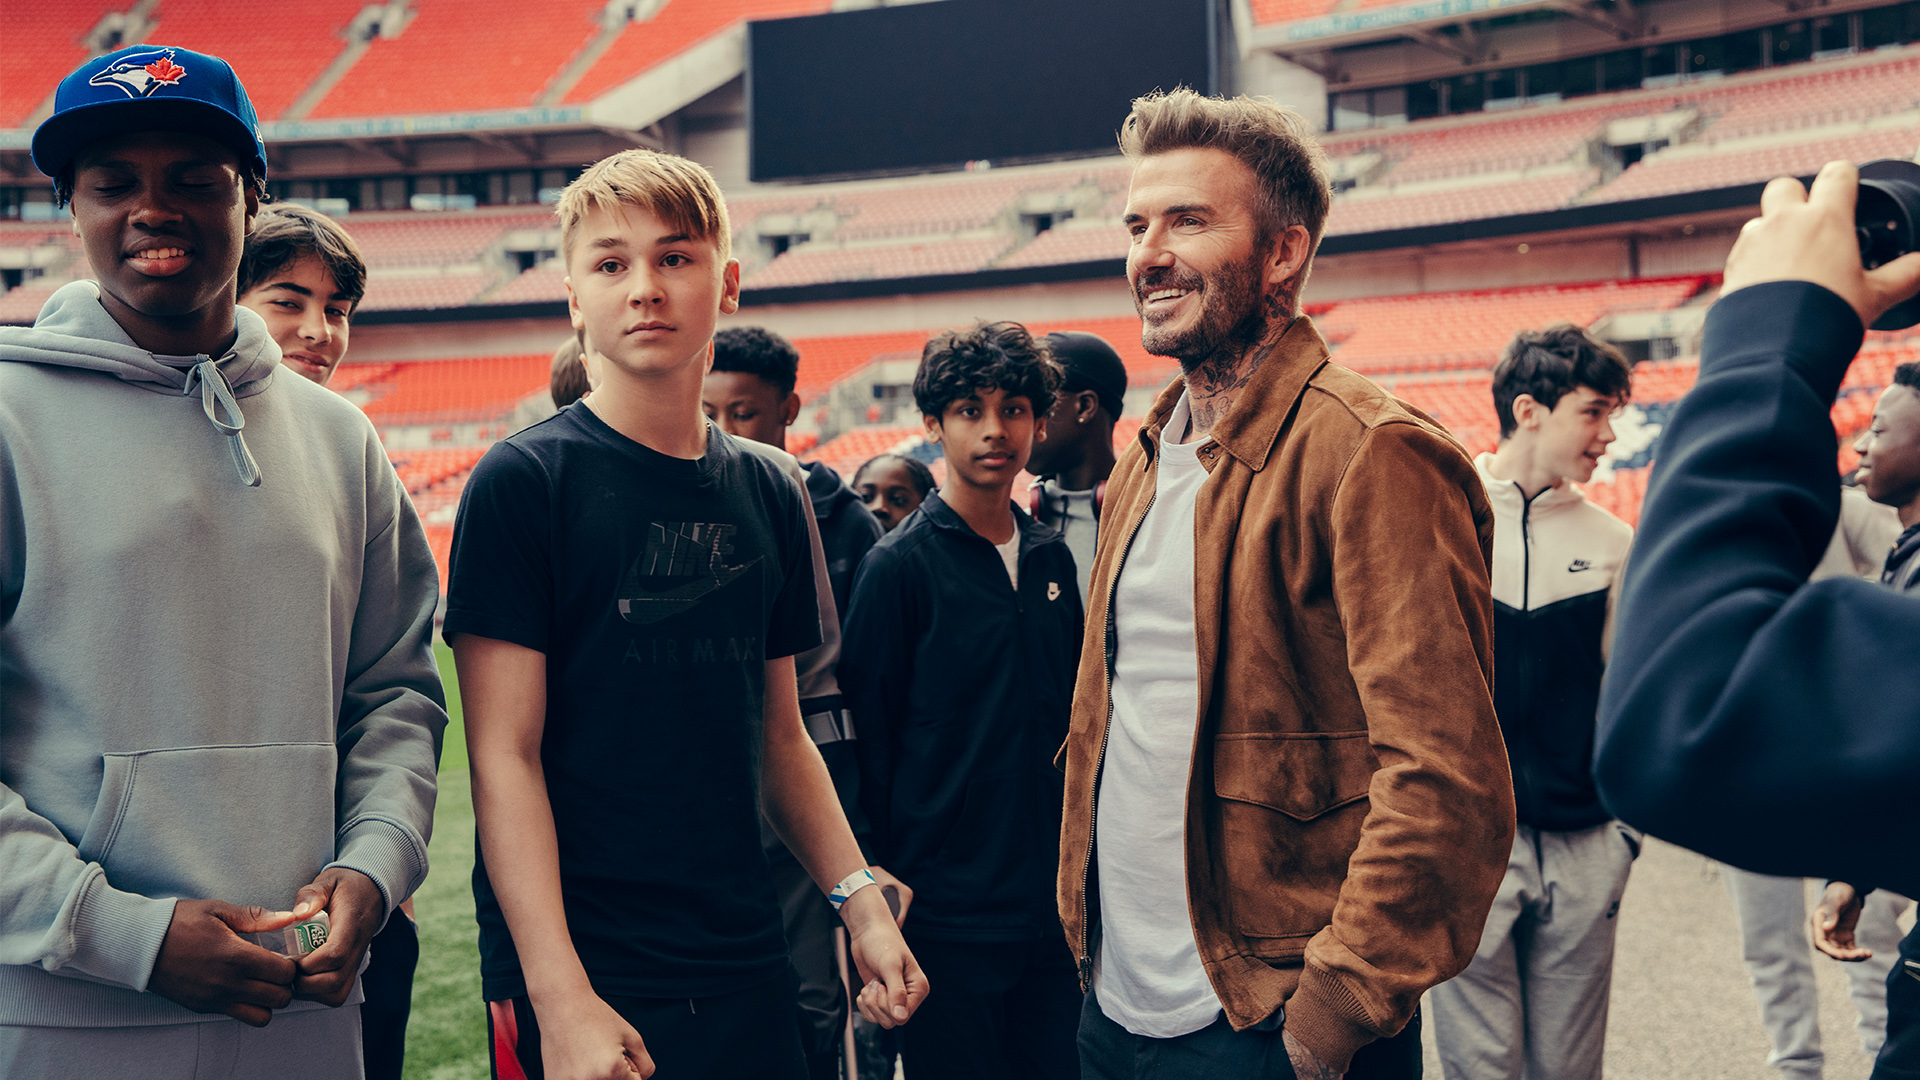 David Beckham at Wembley with Westward Boys under-14s